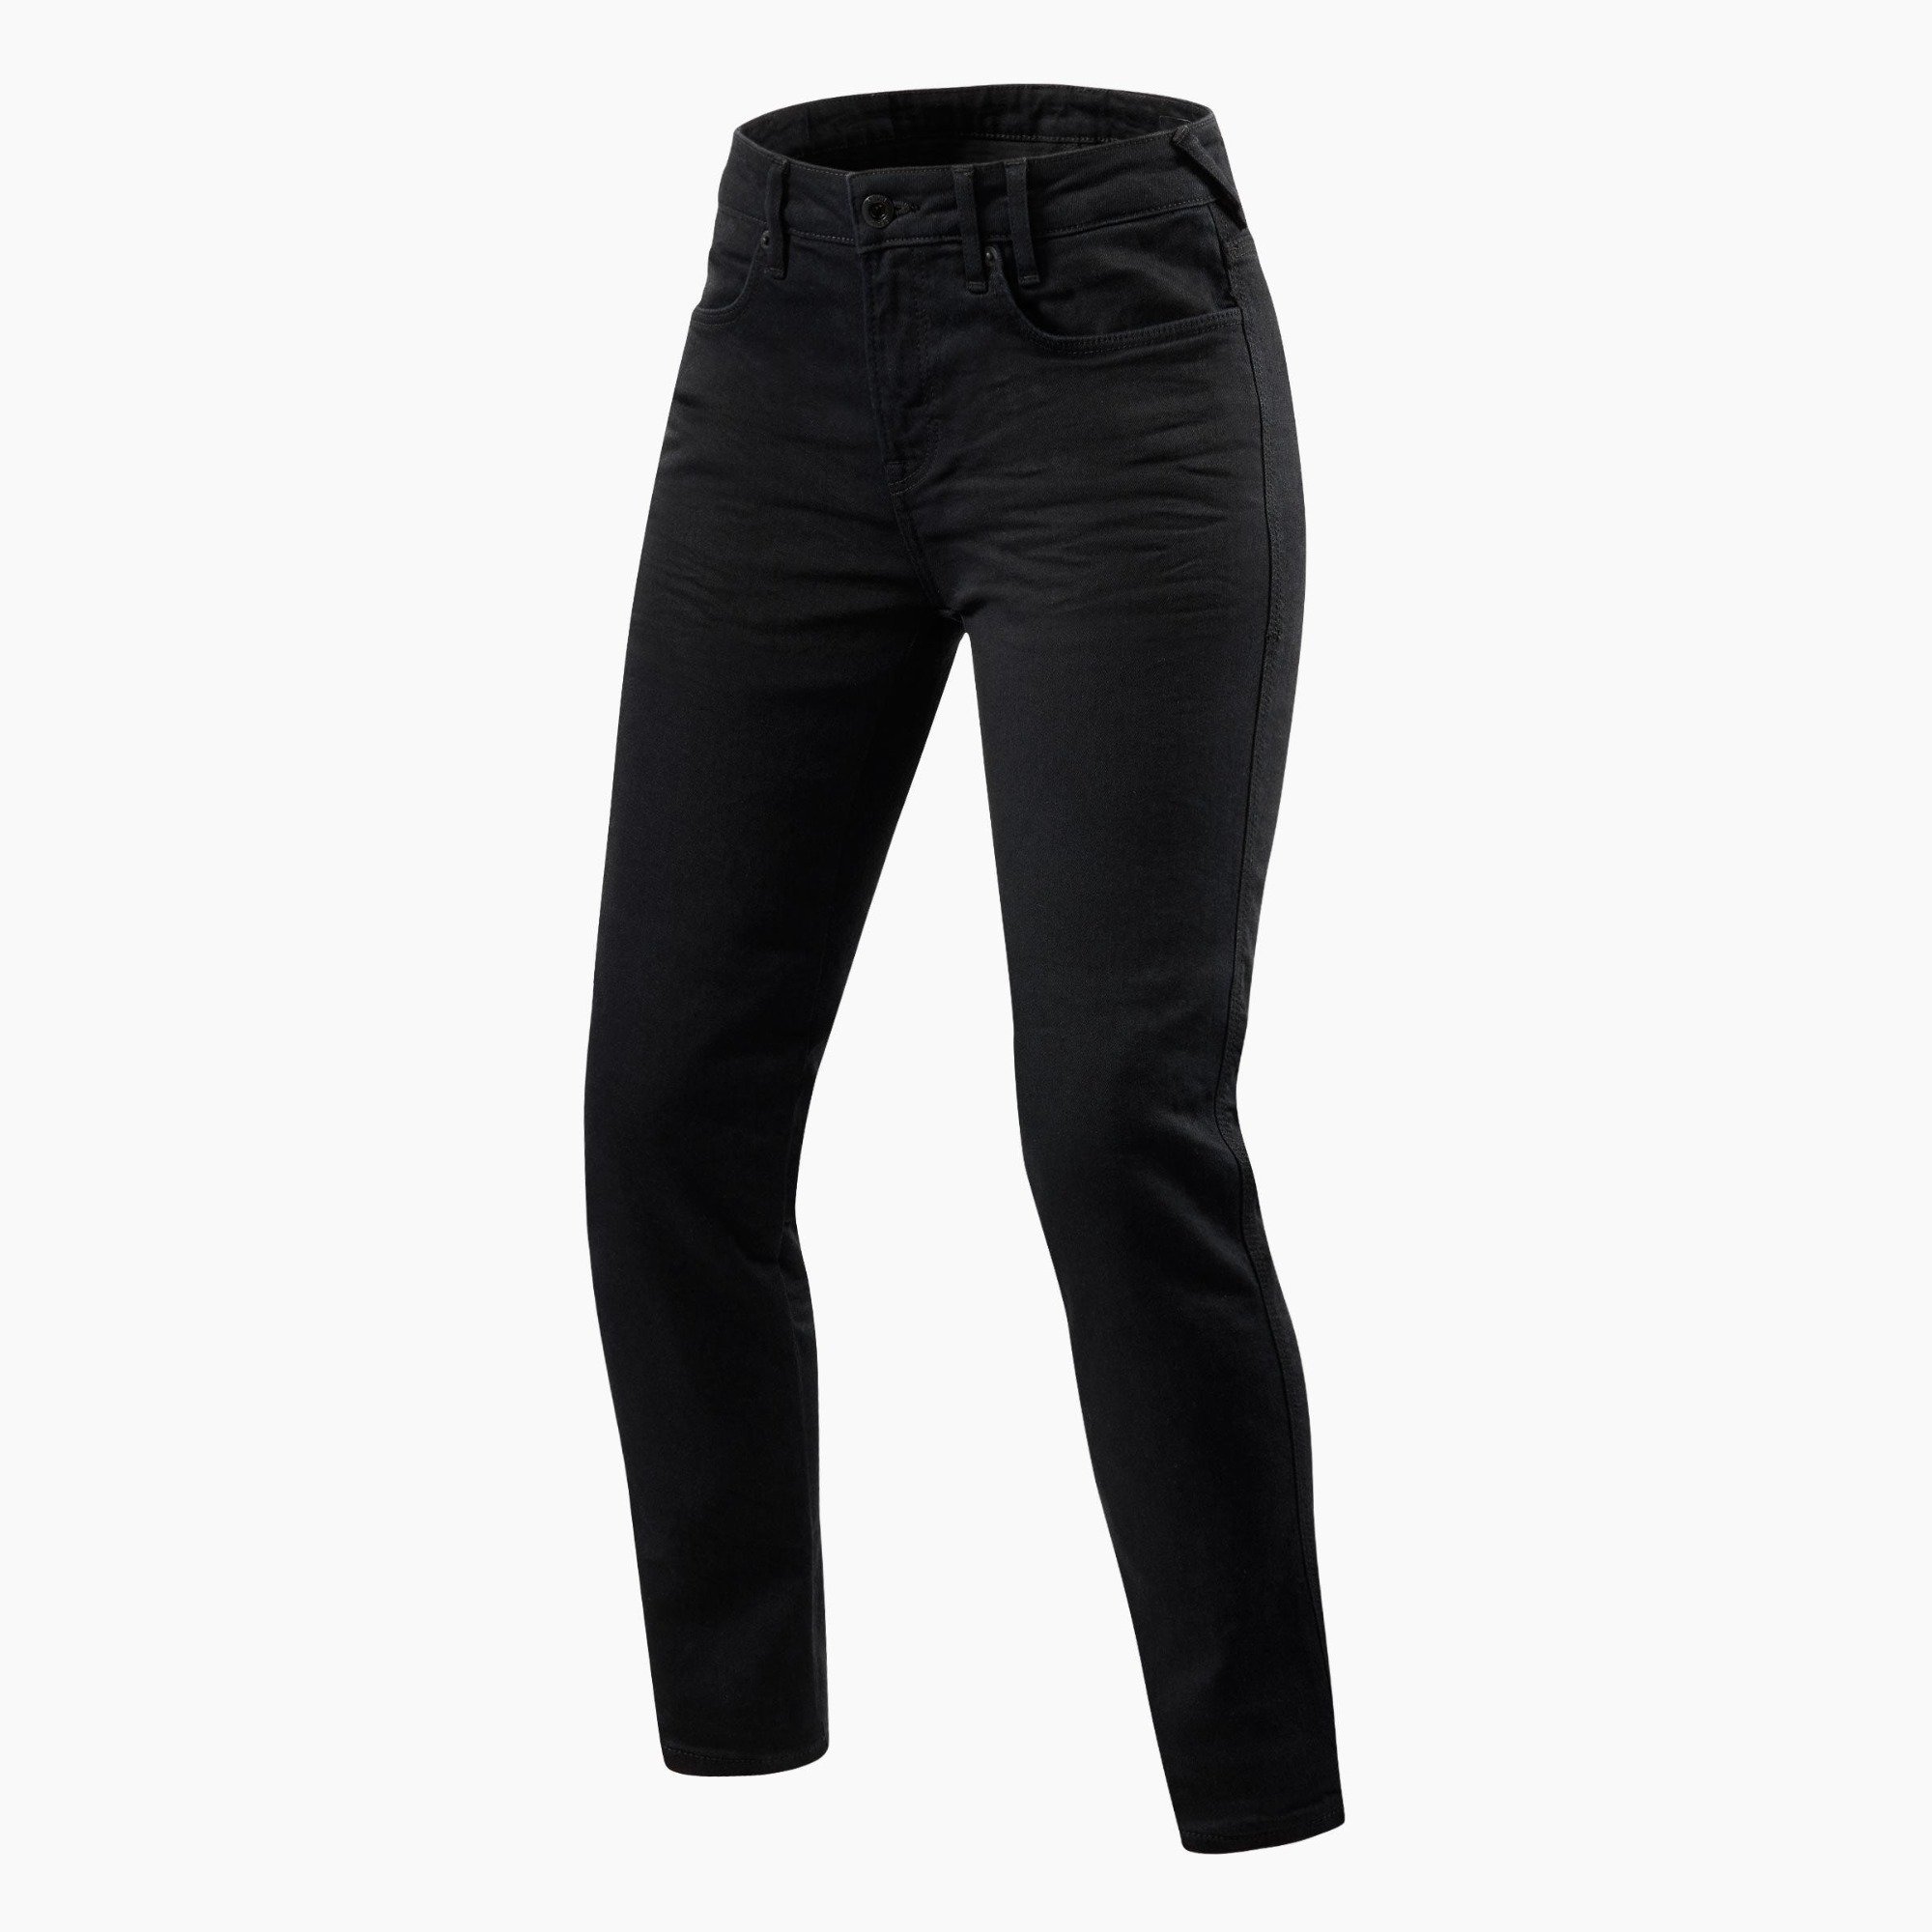 Image of REV'IT! Jeans Maple 2 Ladies SK Black Motorcycle Jeans Size L32/W27 EN